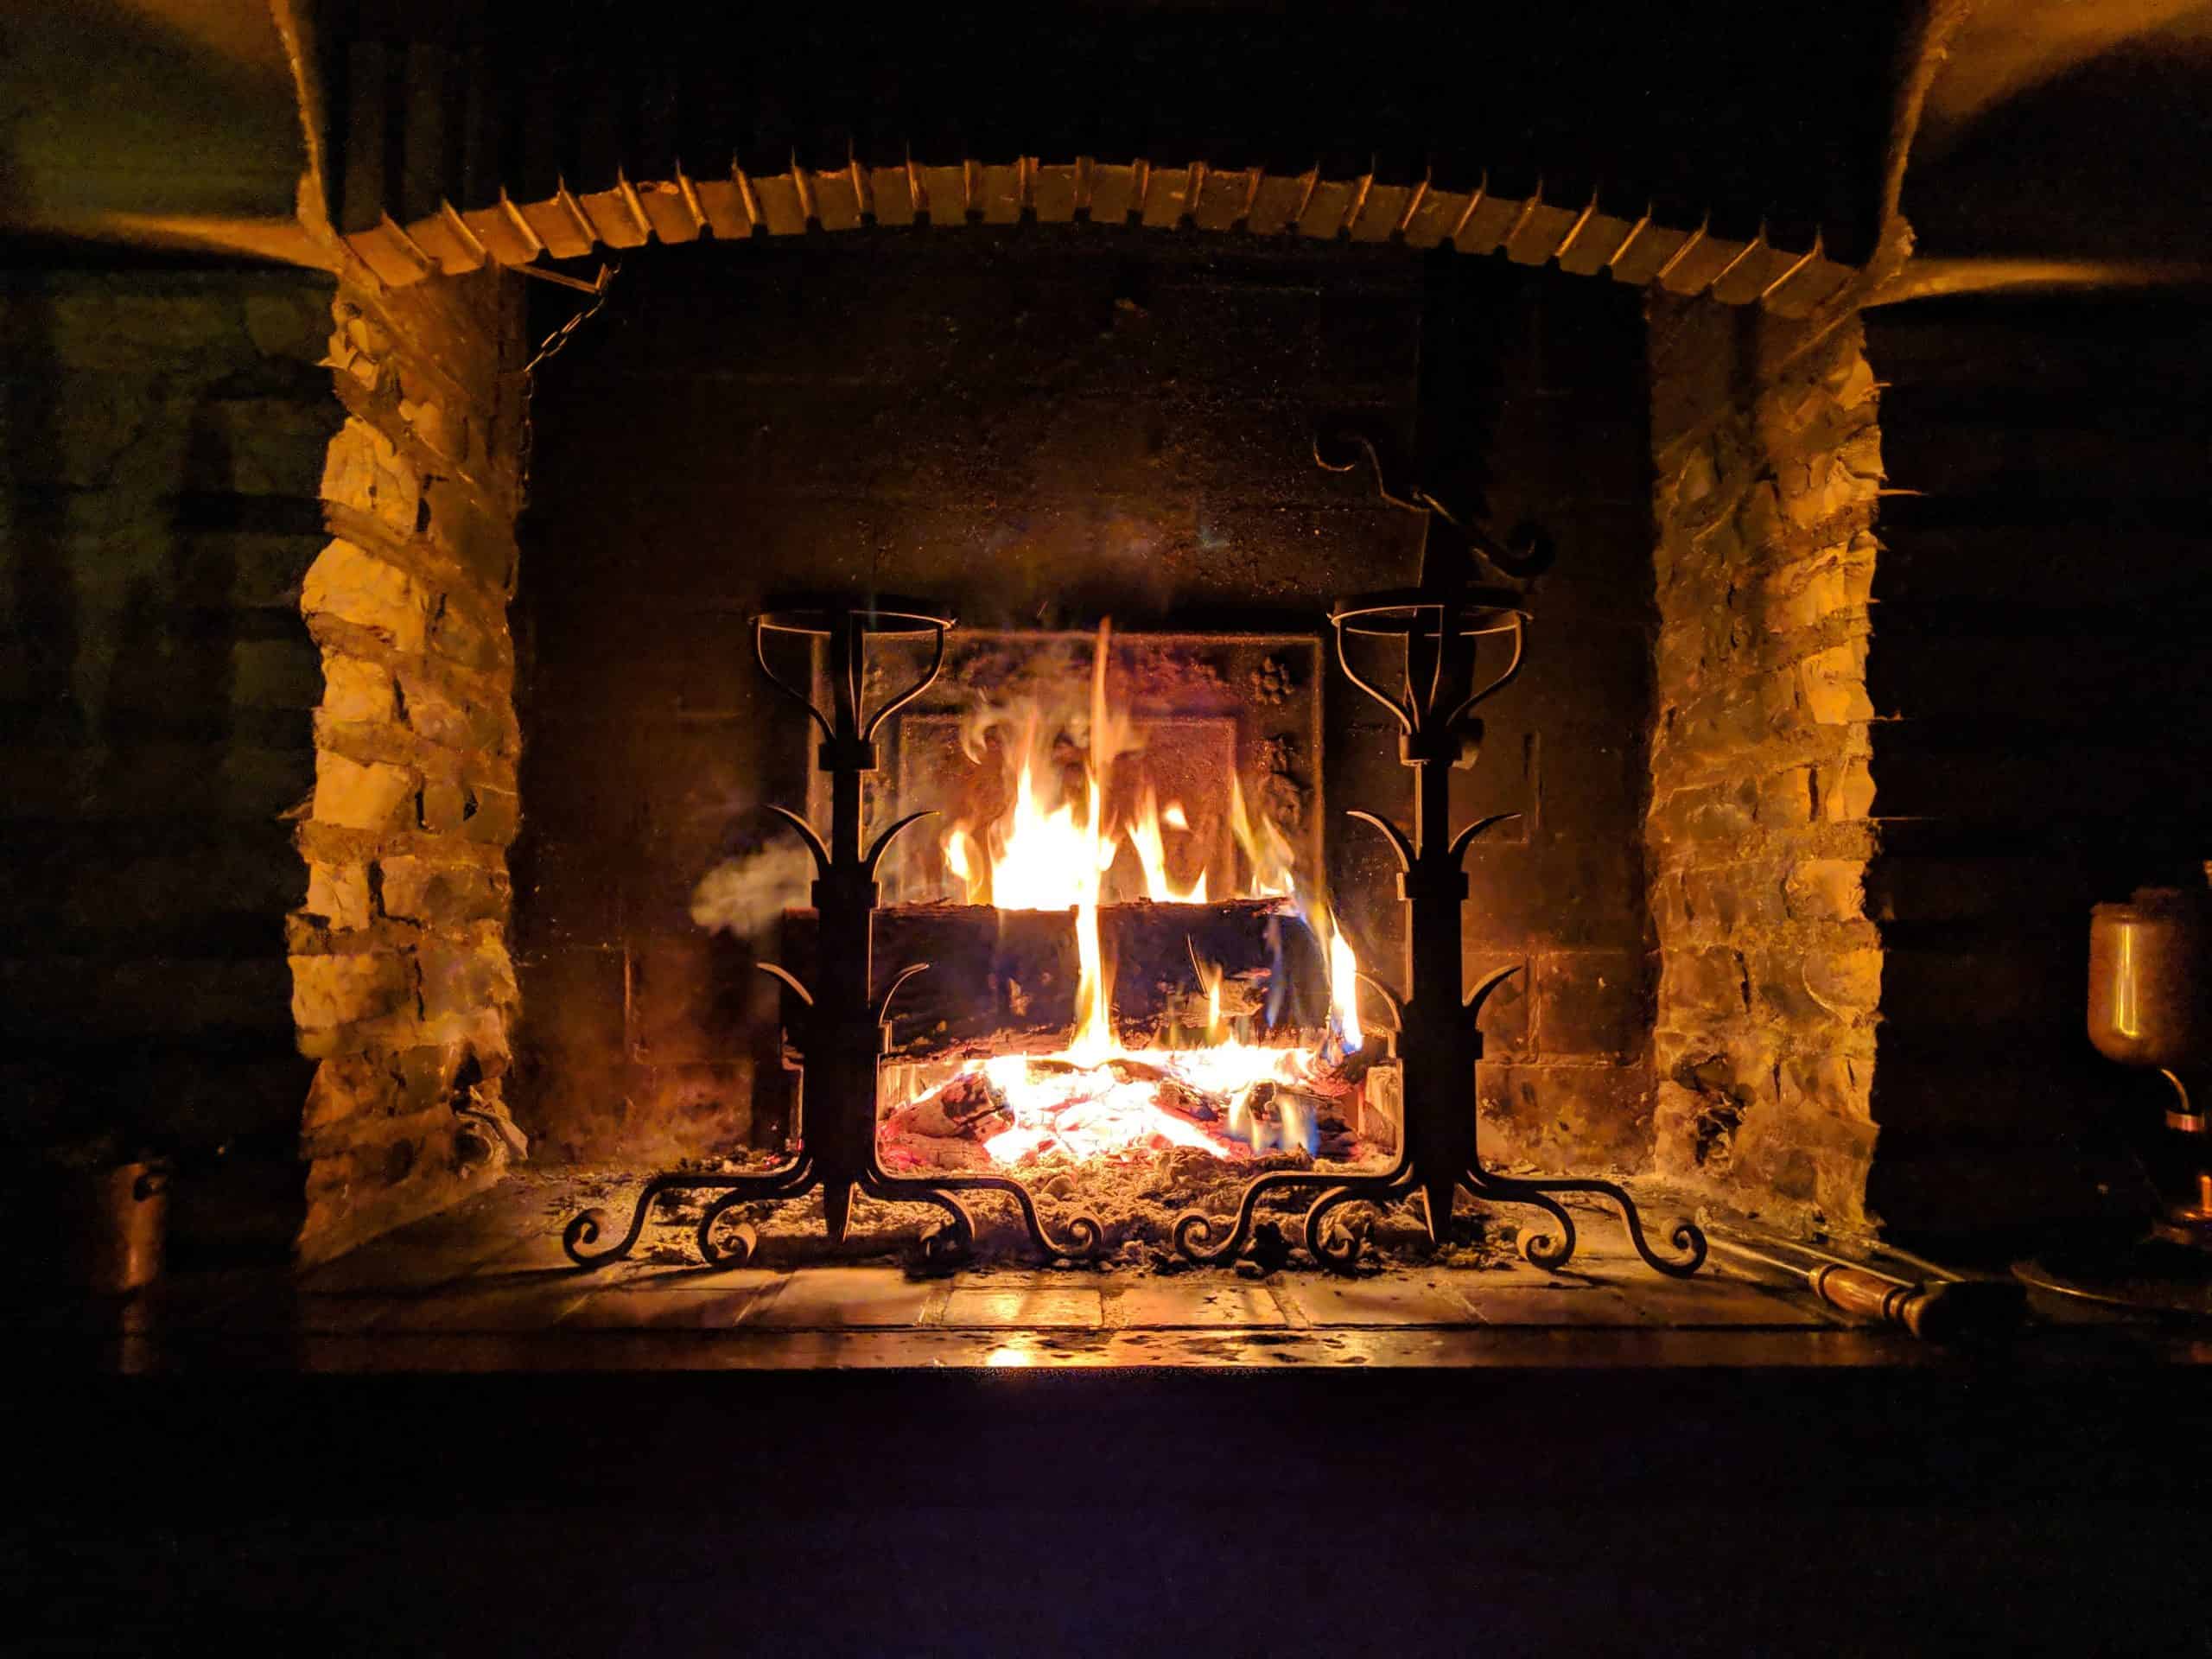 Nice warm fireplace